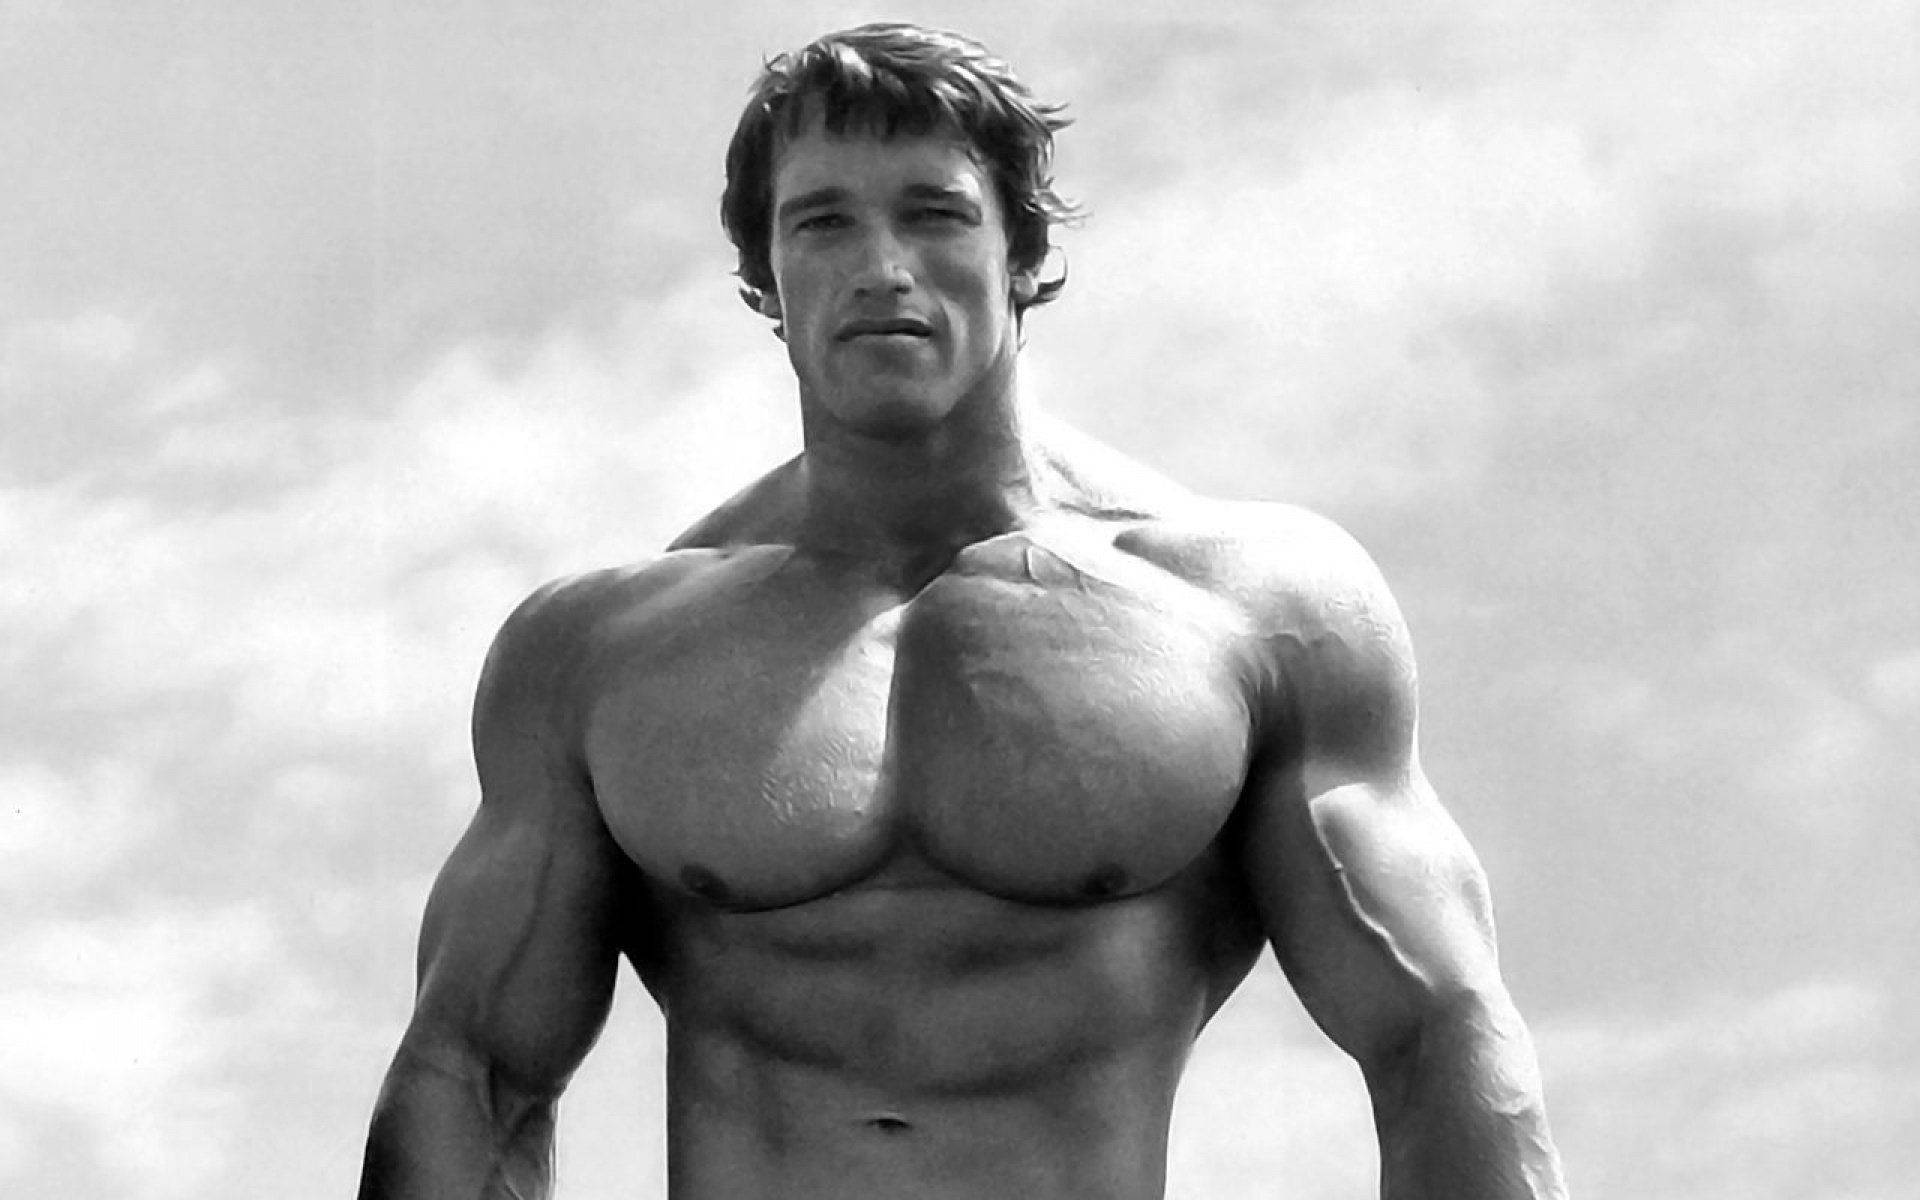 Muscular man pulling chain gym bodybuilder HD wallpaper download